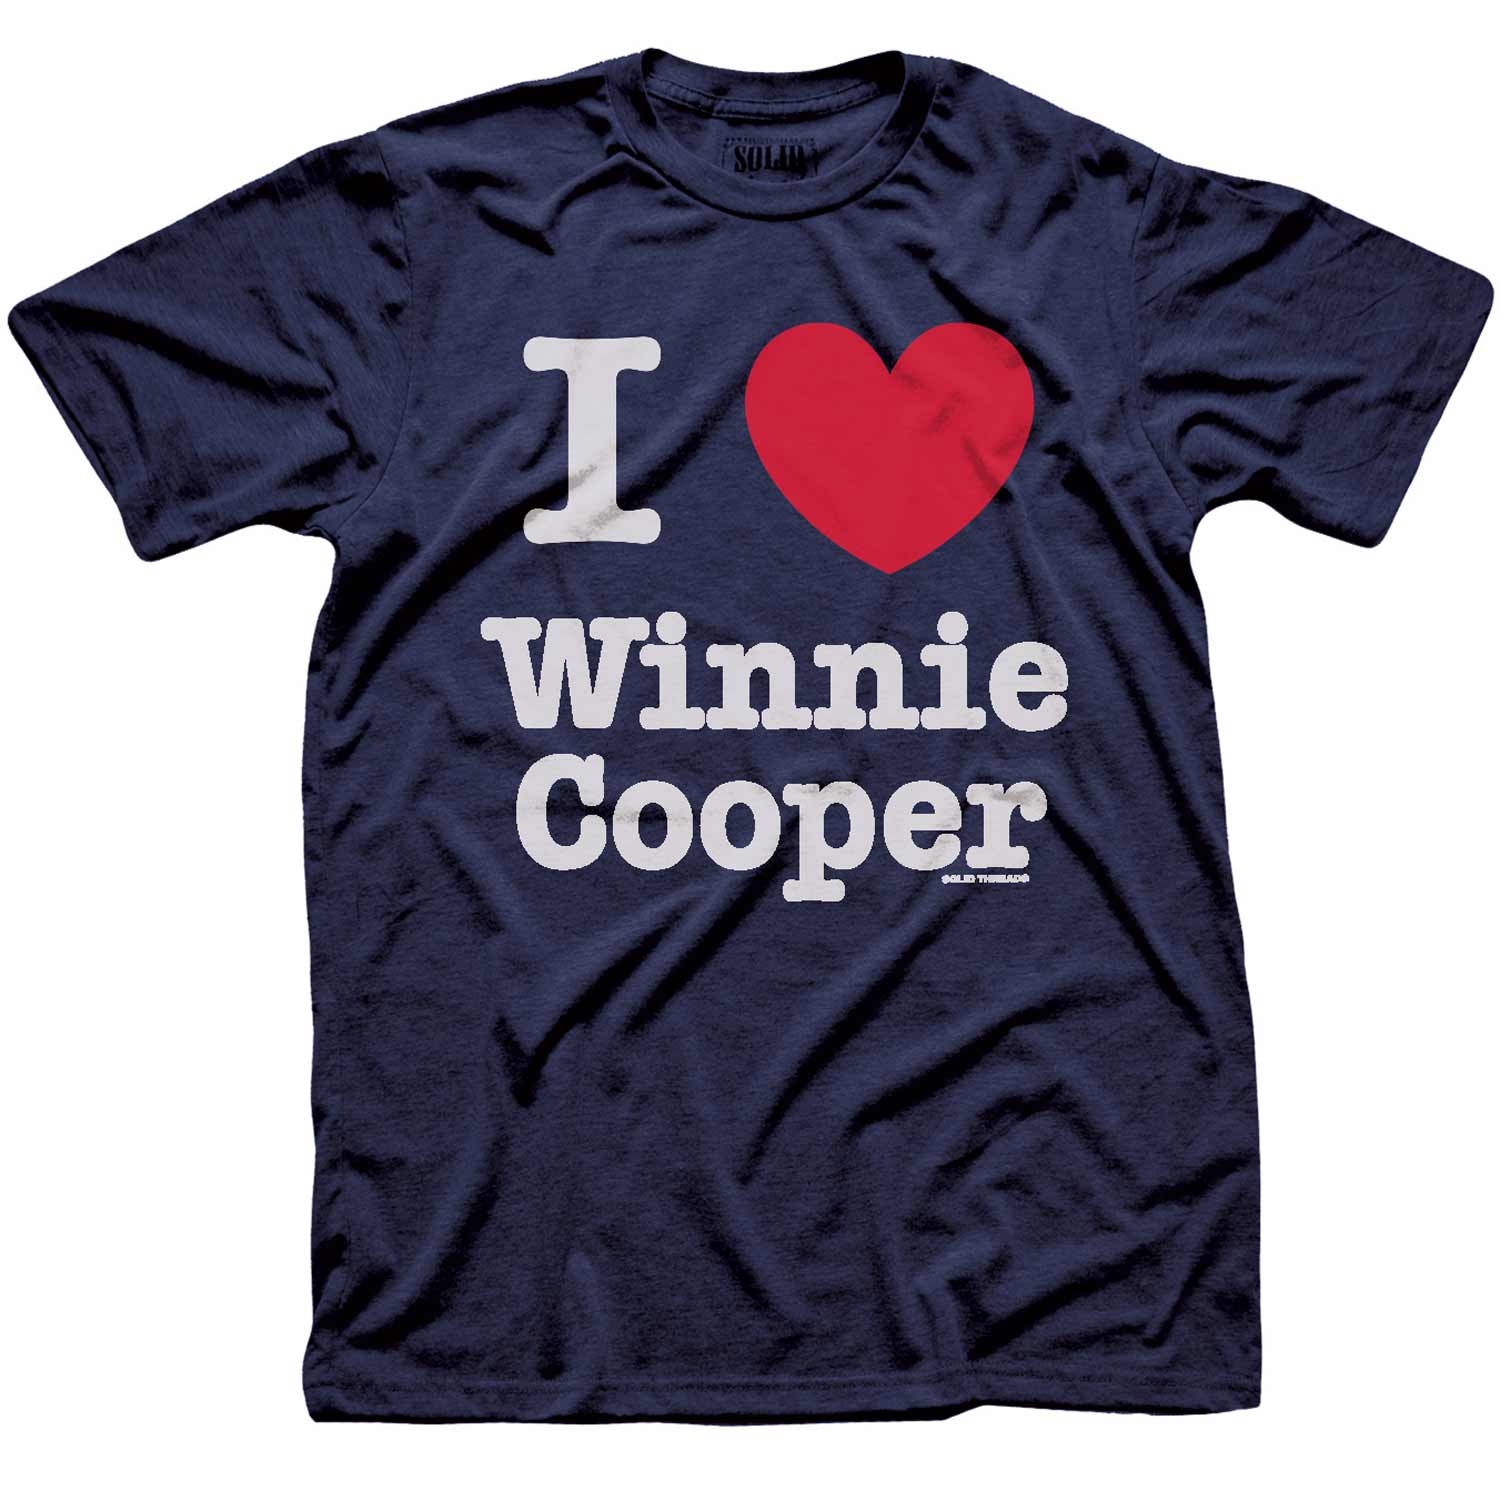 Men's Winnie Cooper Cool Graphic T-Shirt | Vintage Wonder Years Television Tee | Solid Threads